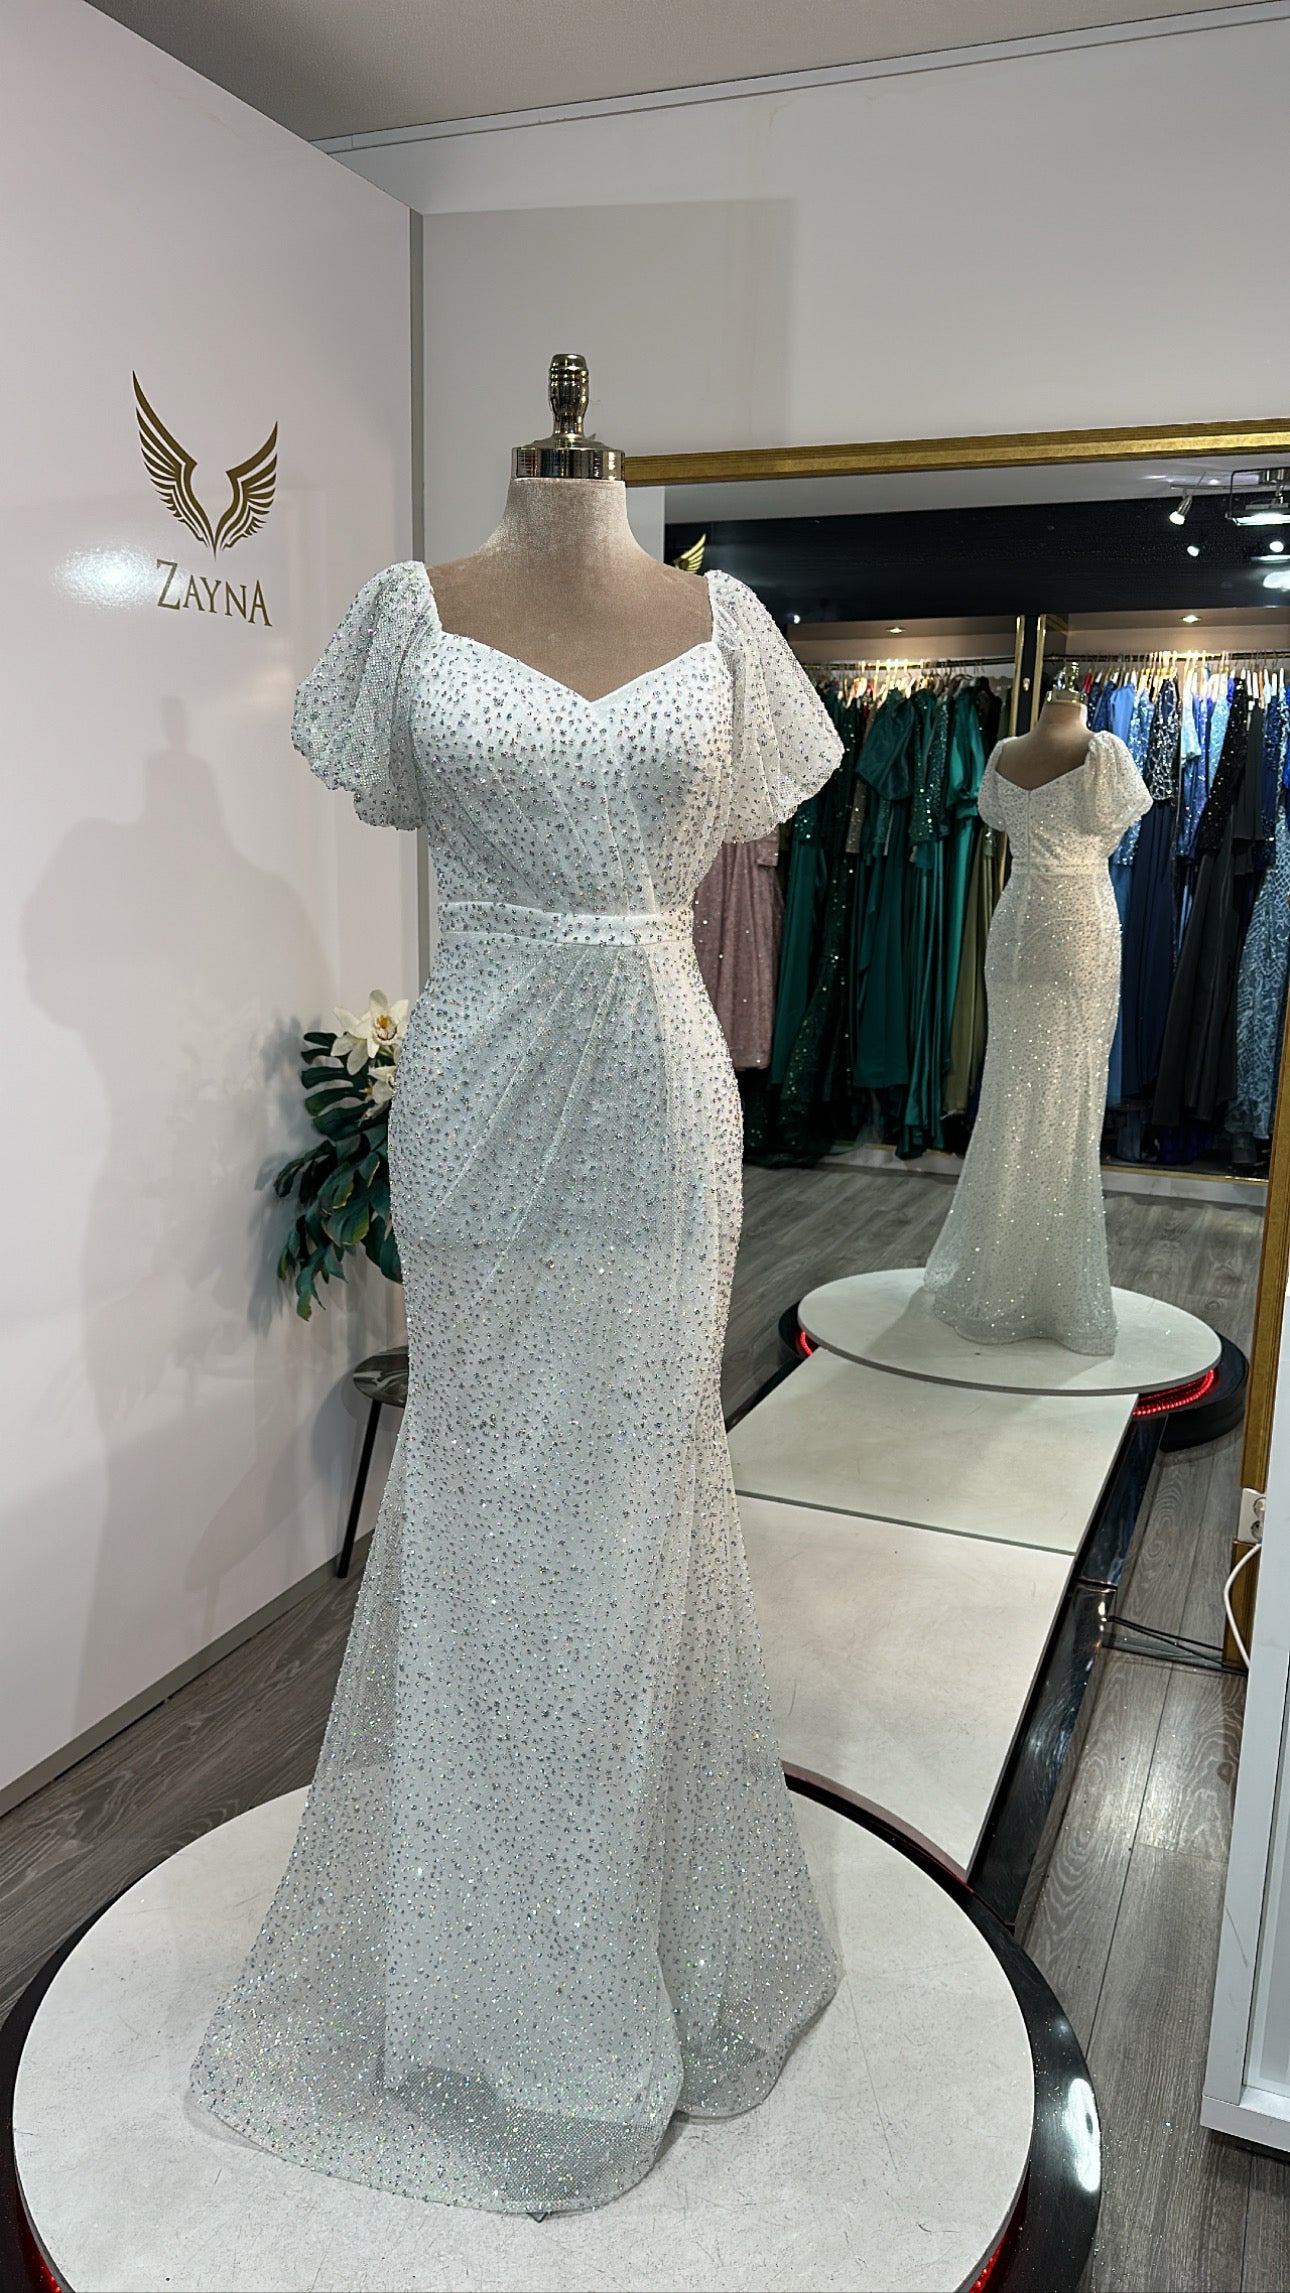 Elegant white dress with glitter, beads